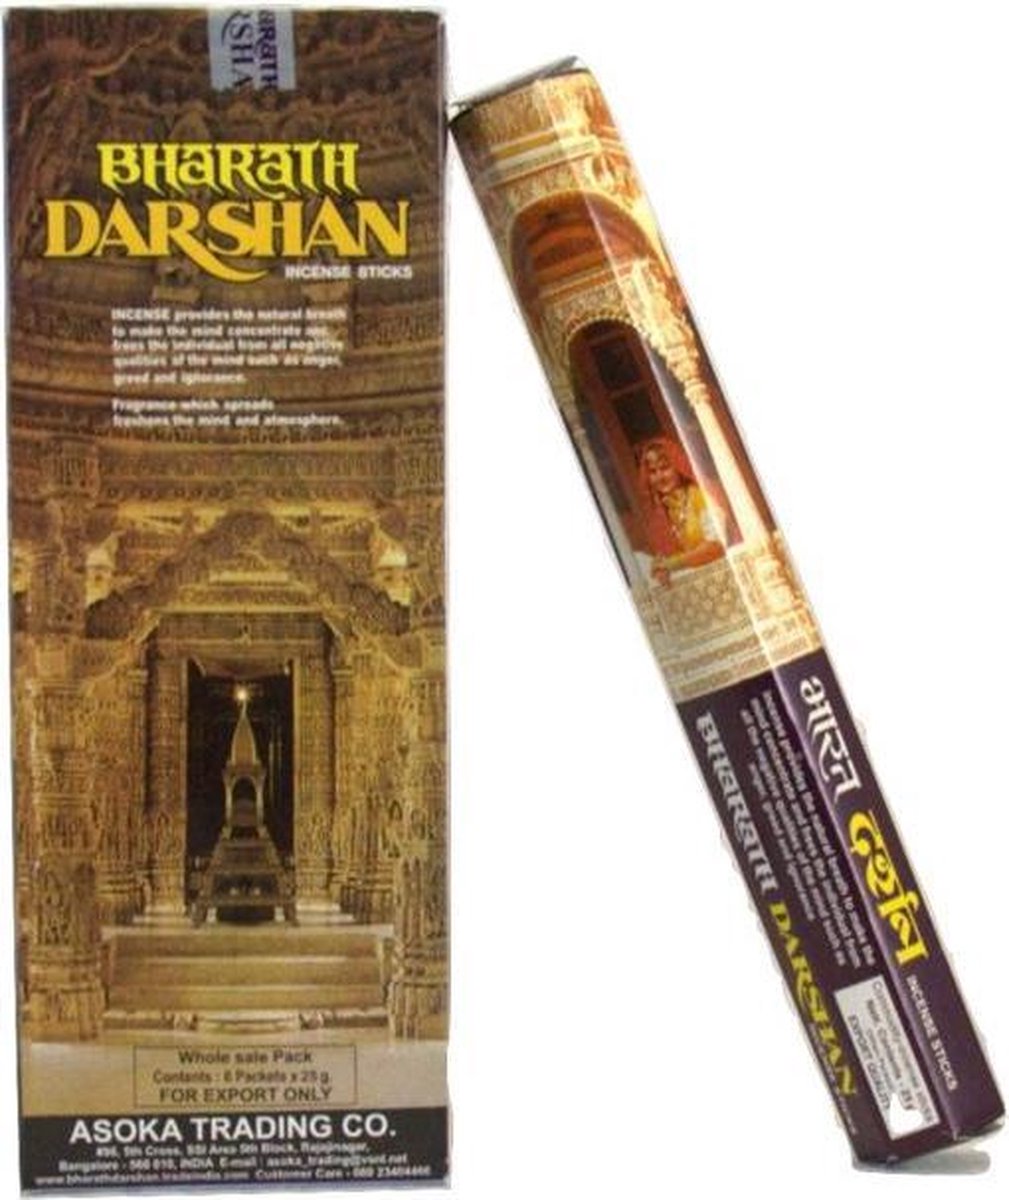 Wierook Darshan Bharath - Yogi & Yogini naturals